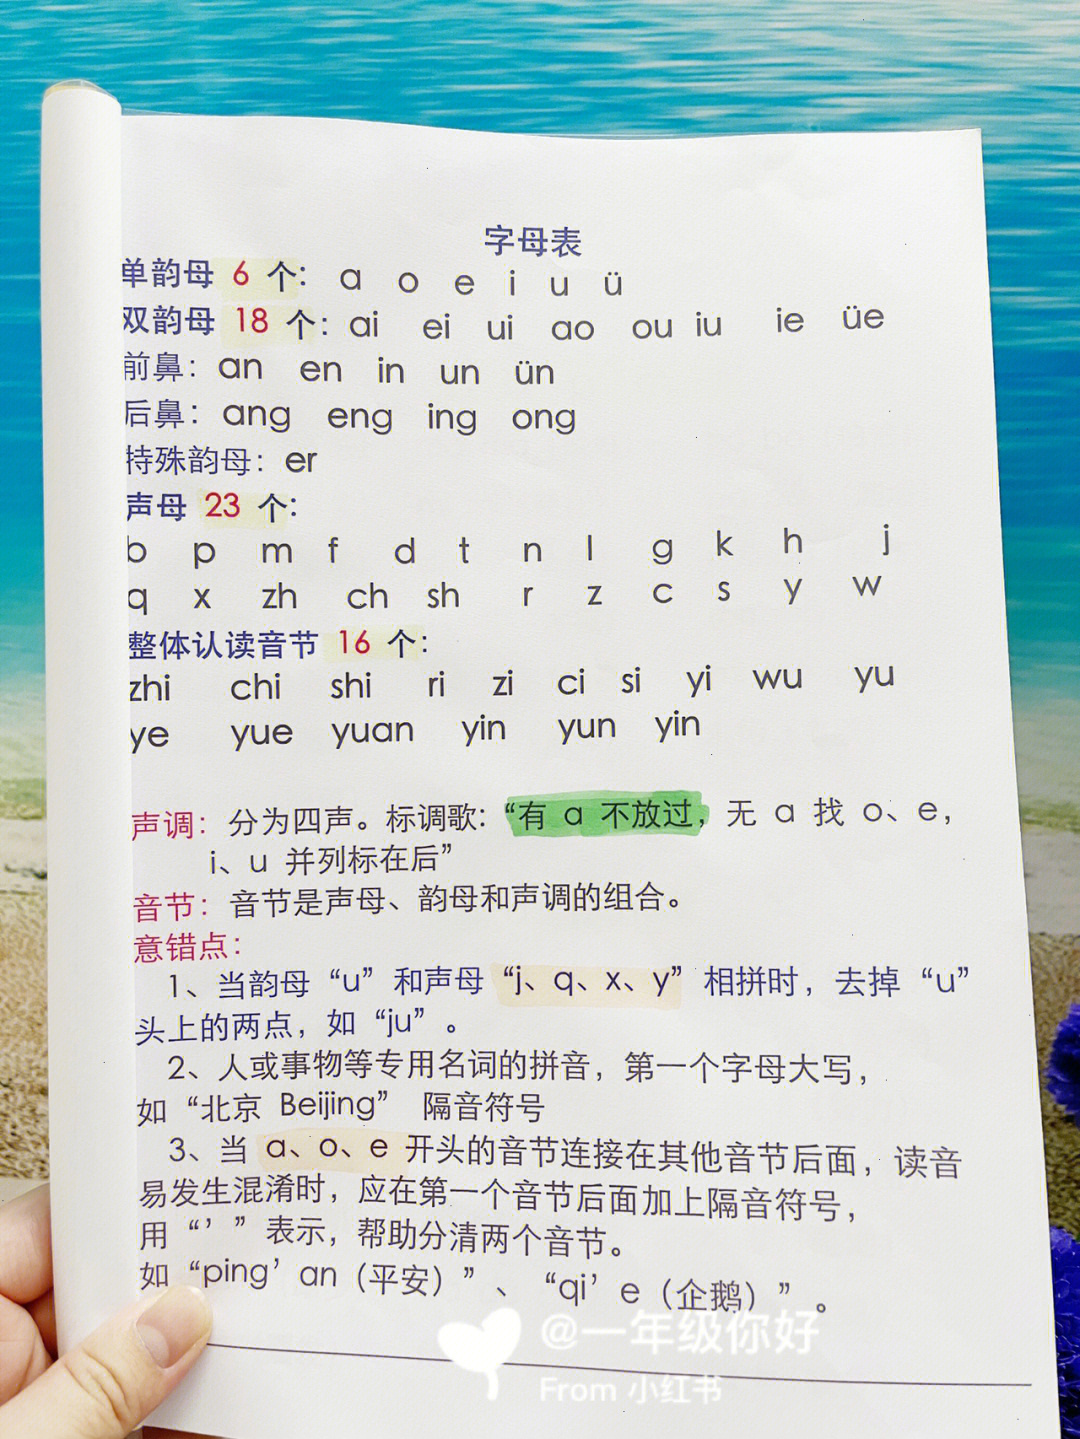 yuan怎么拼读图片